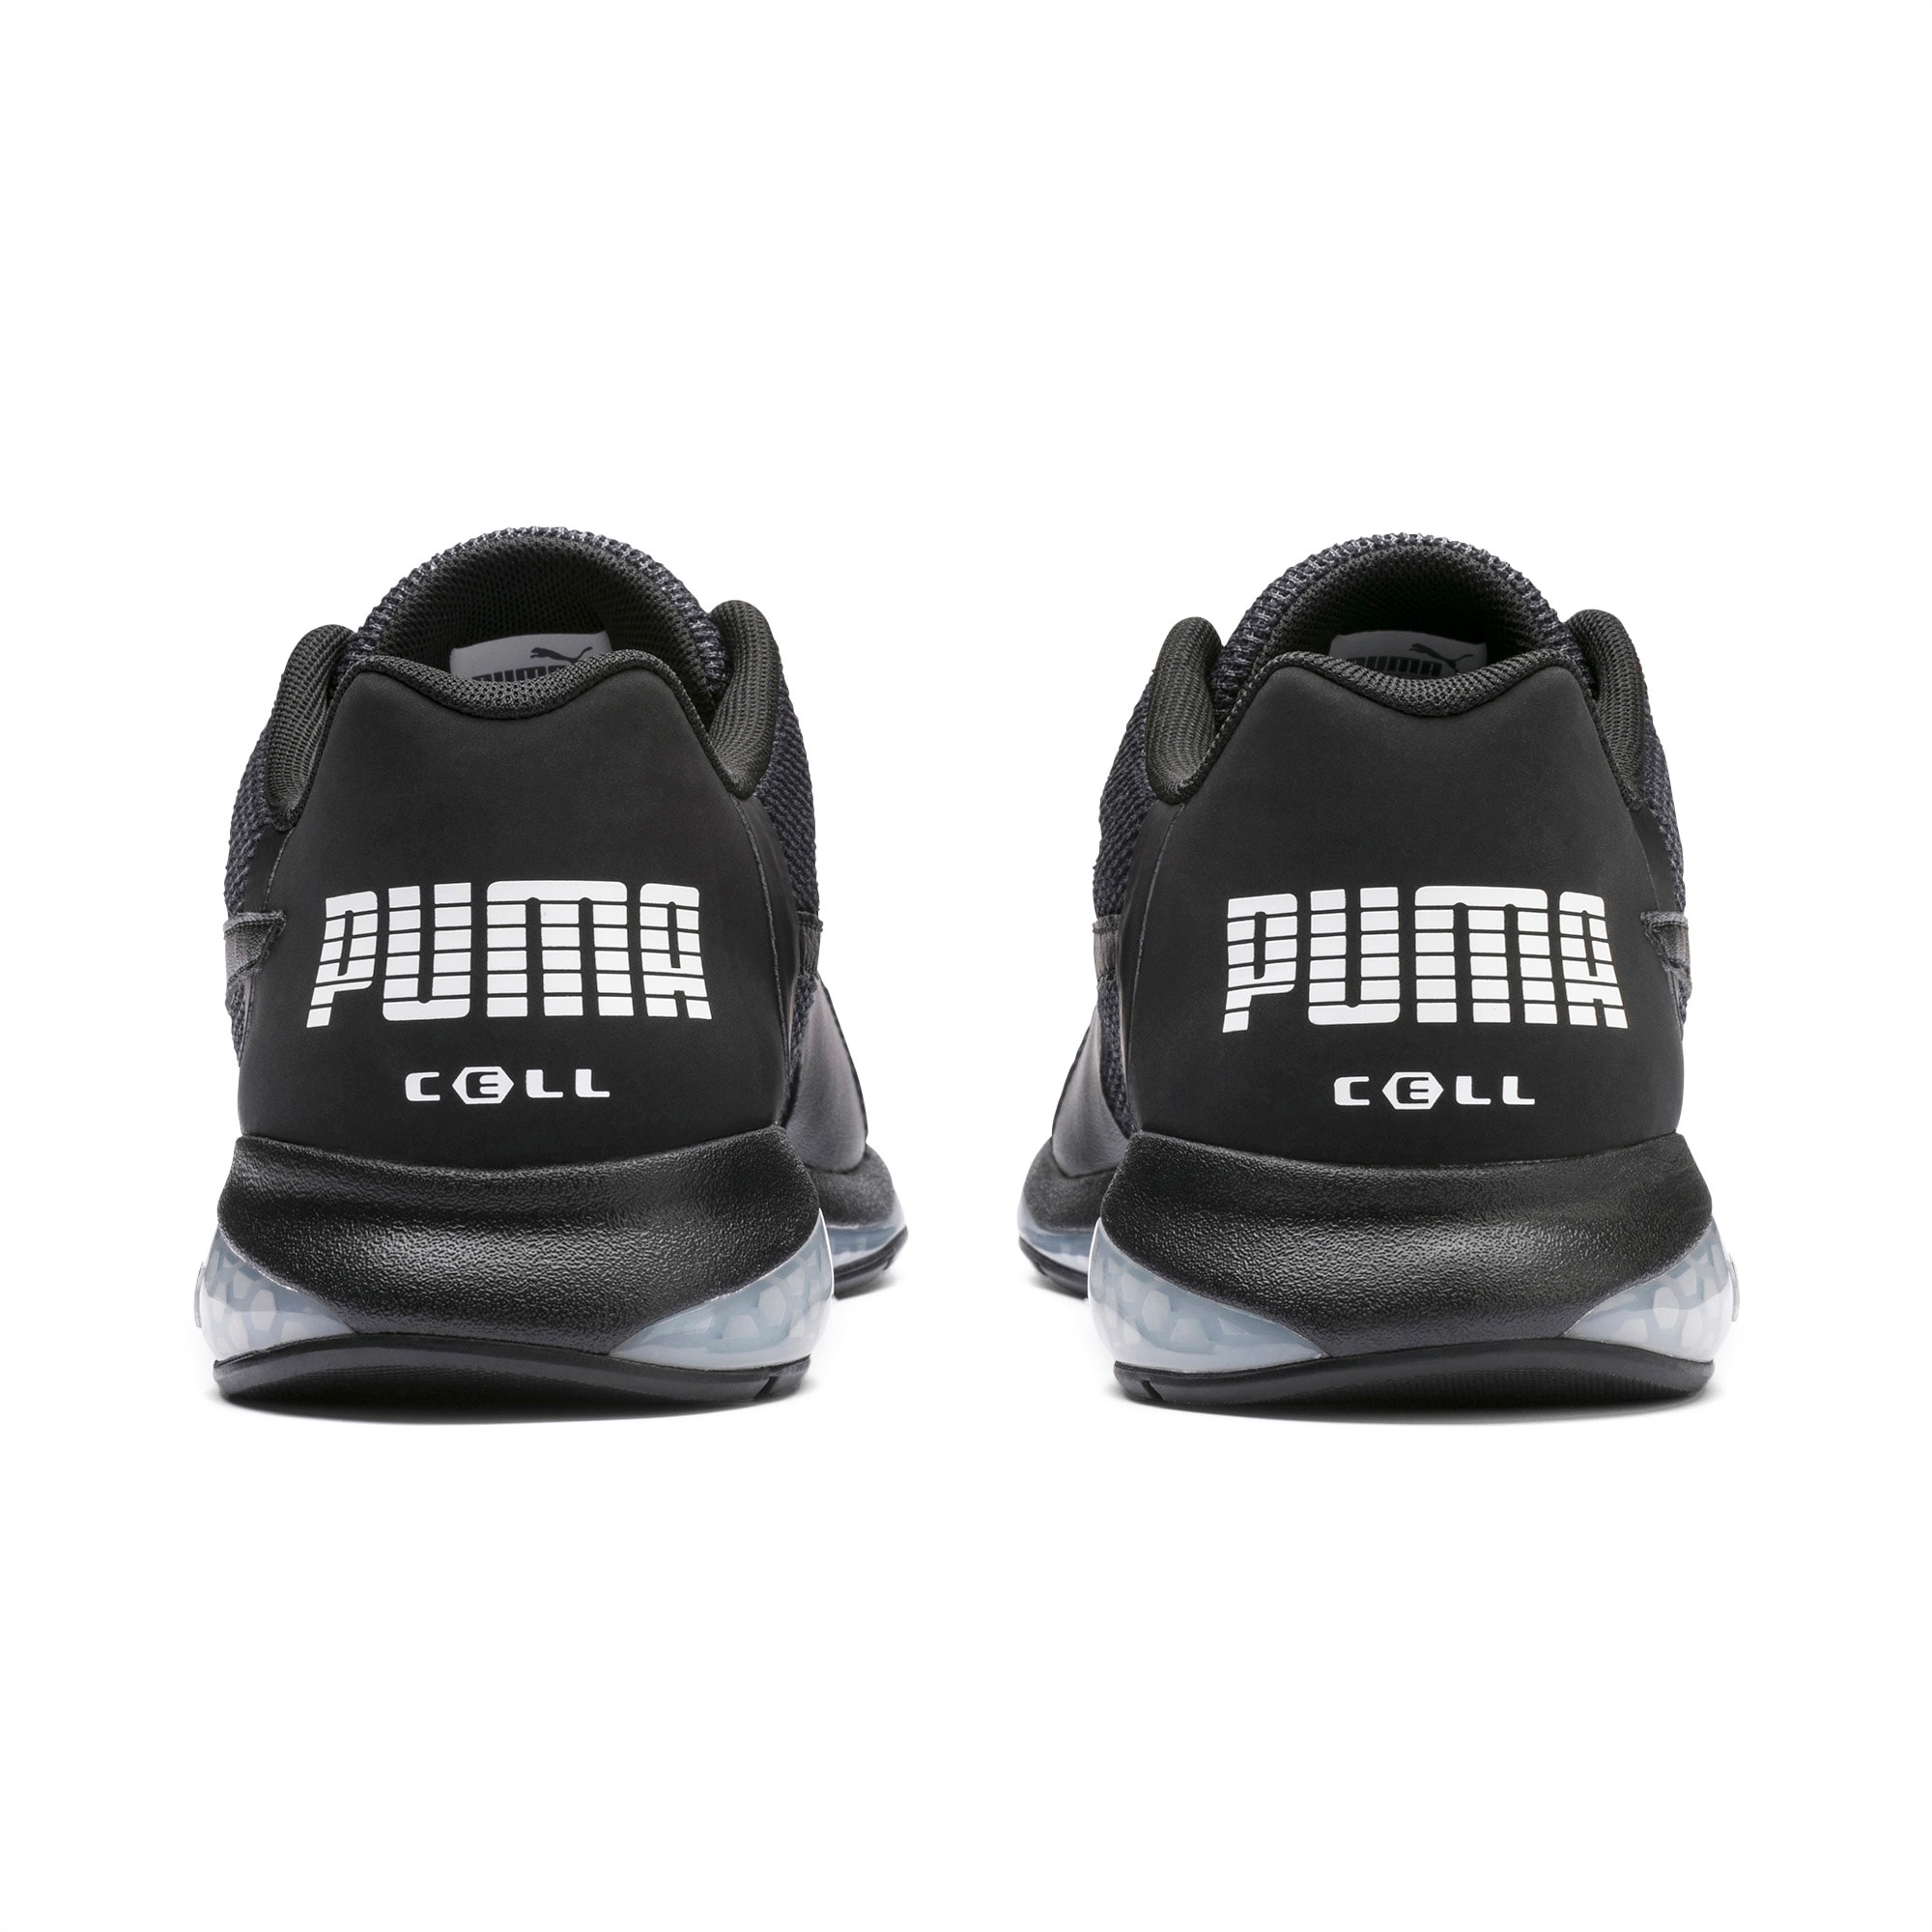 Puma Cell Ultimate. Puma point.